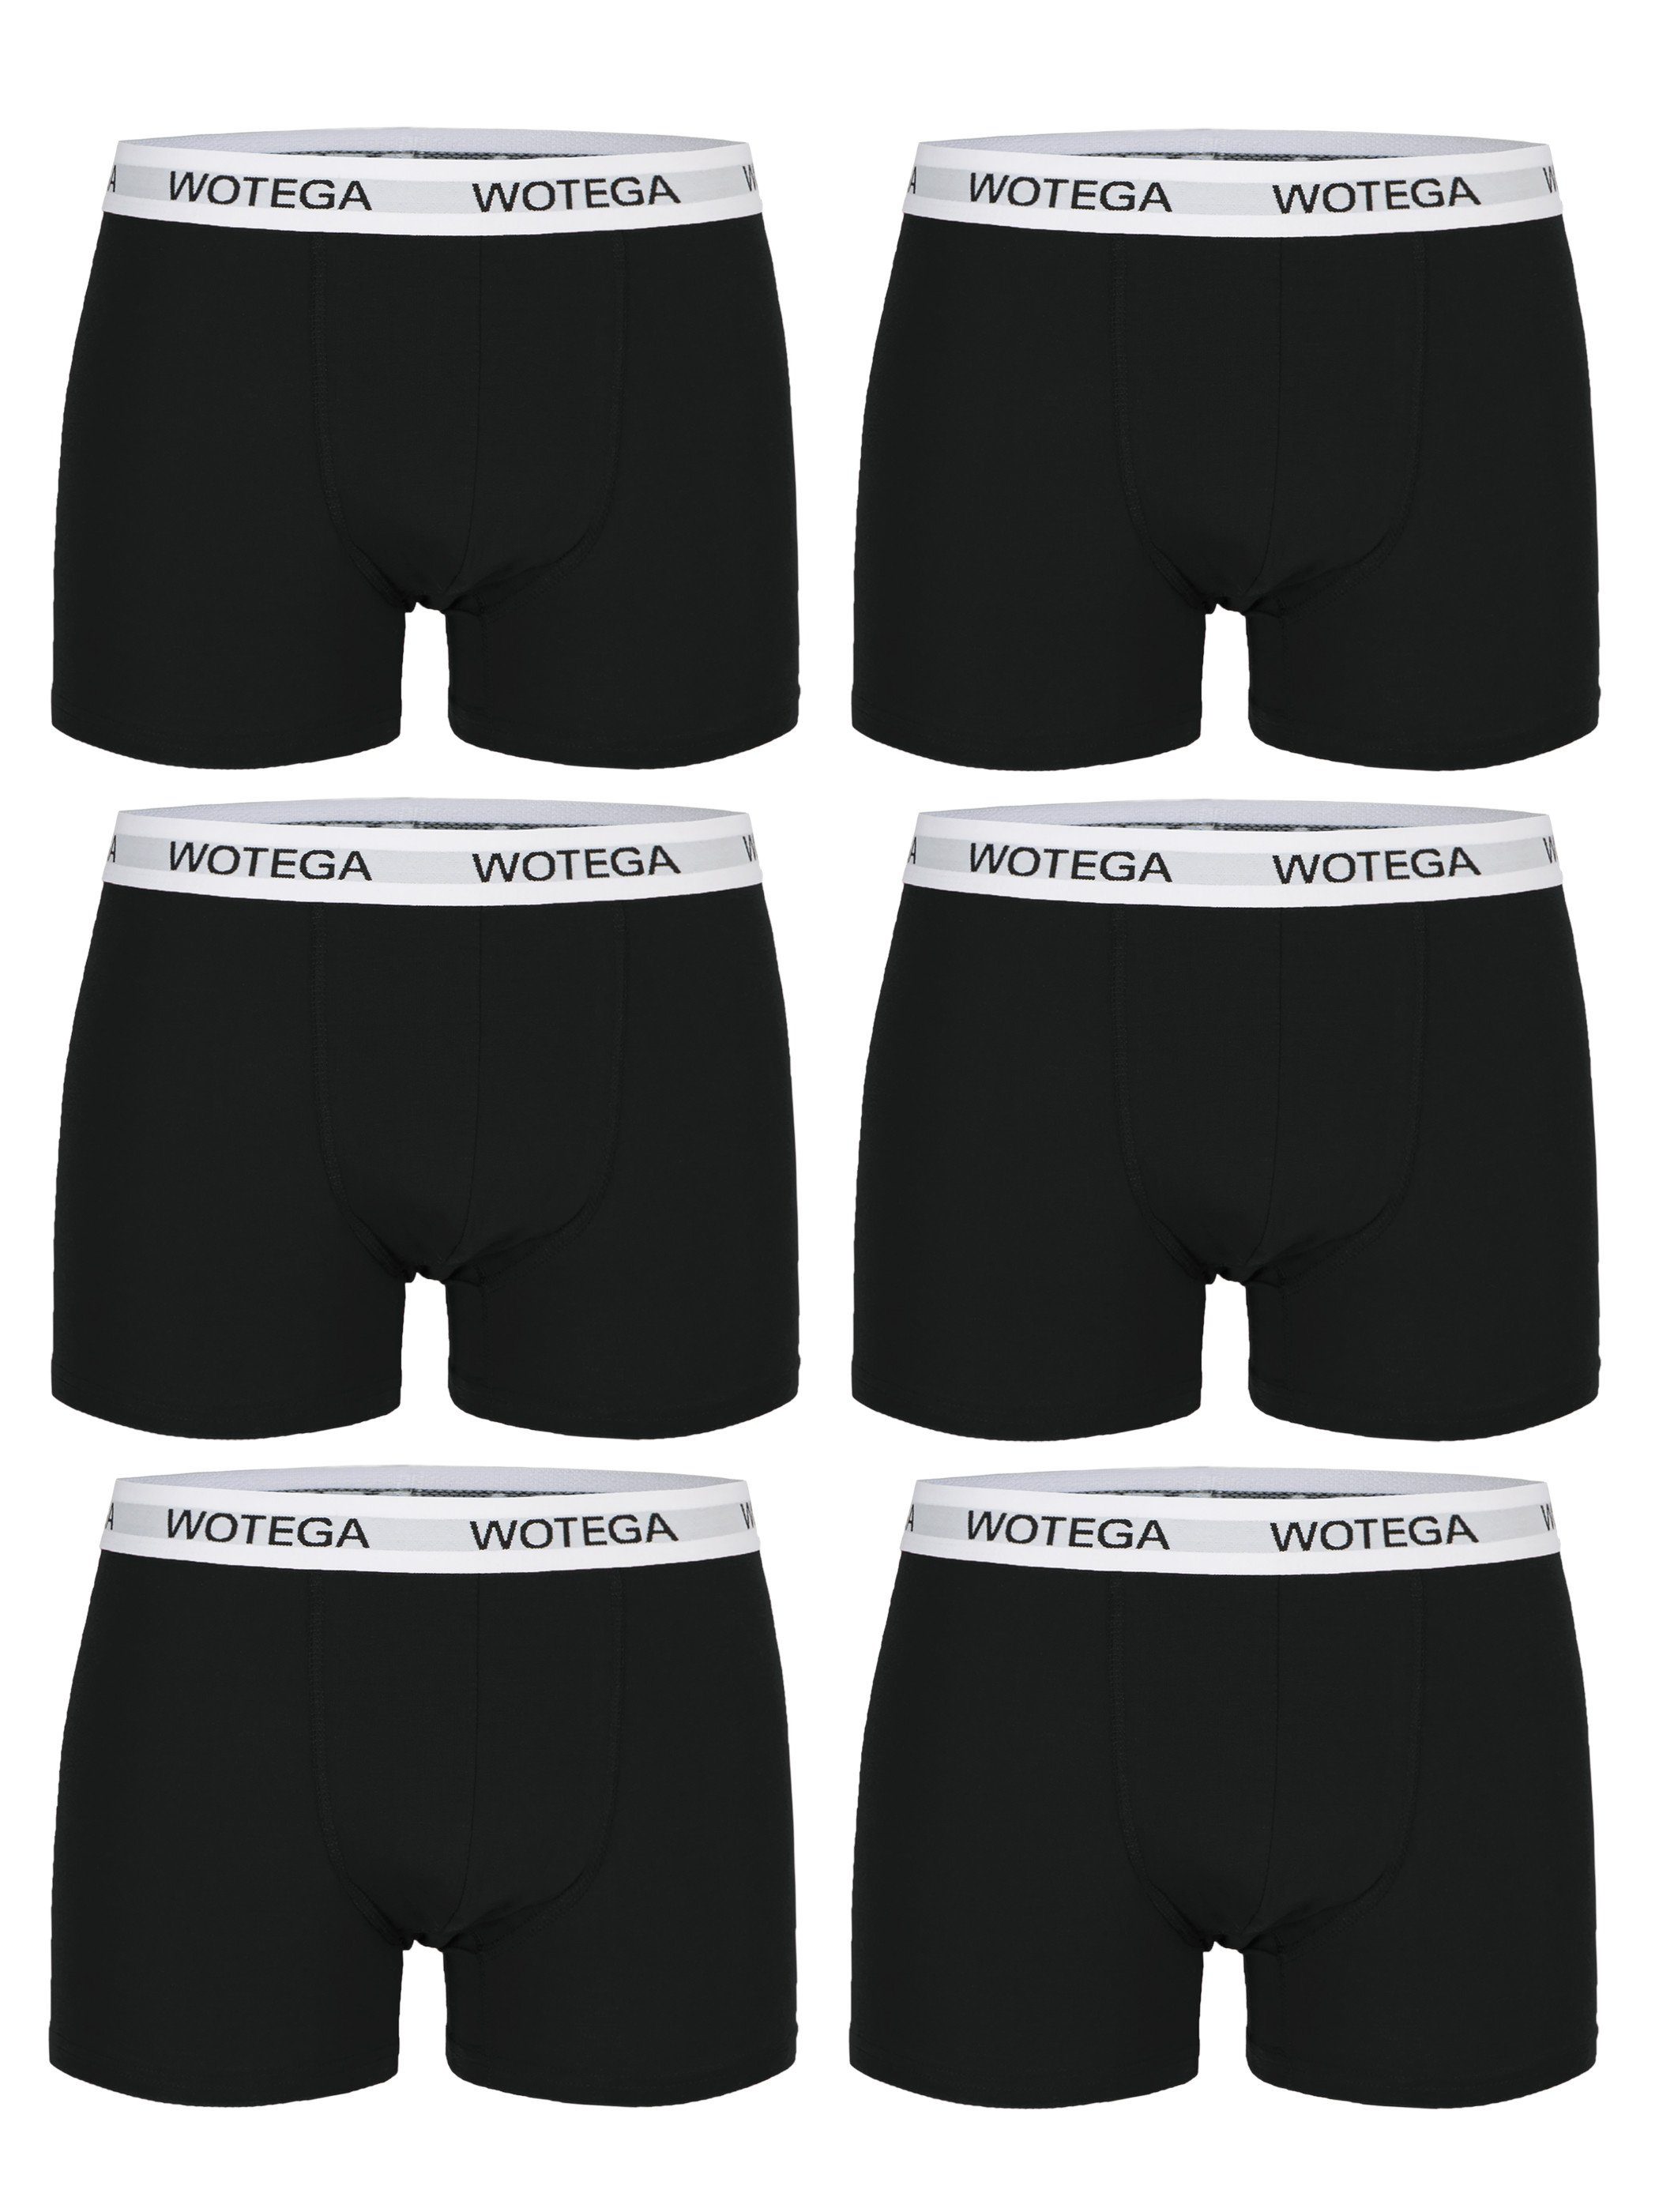 WOTEGA Boxershorts Joe (Spar-Packung, 6er-Pack) bequeme Baumwoll Unterhosen im 6er Pack Schwarz (black 194008)